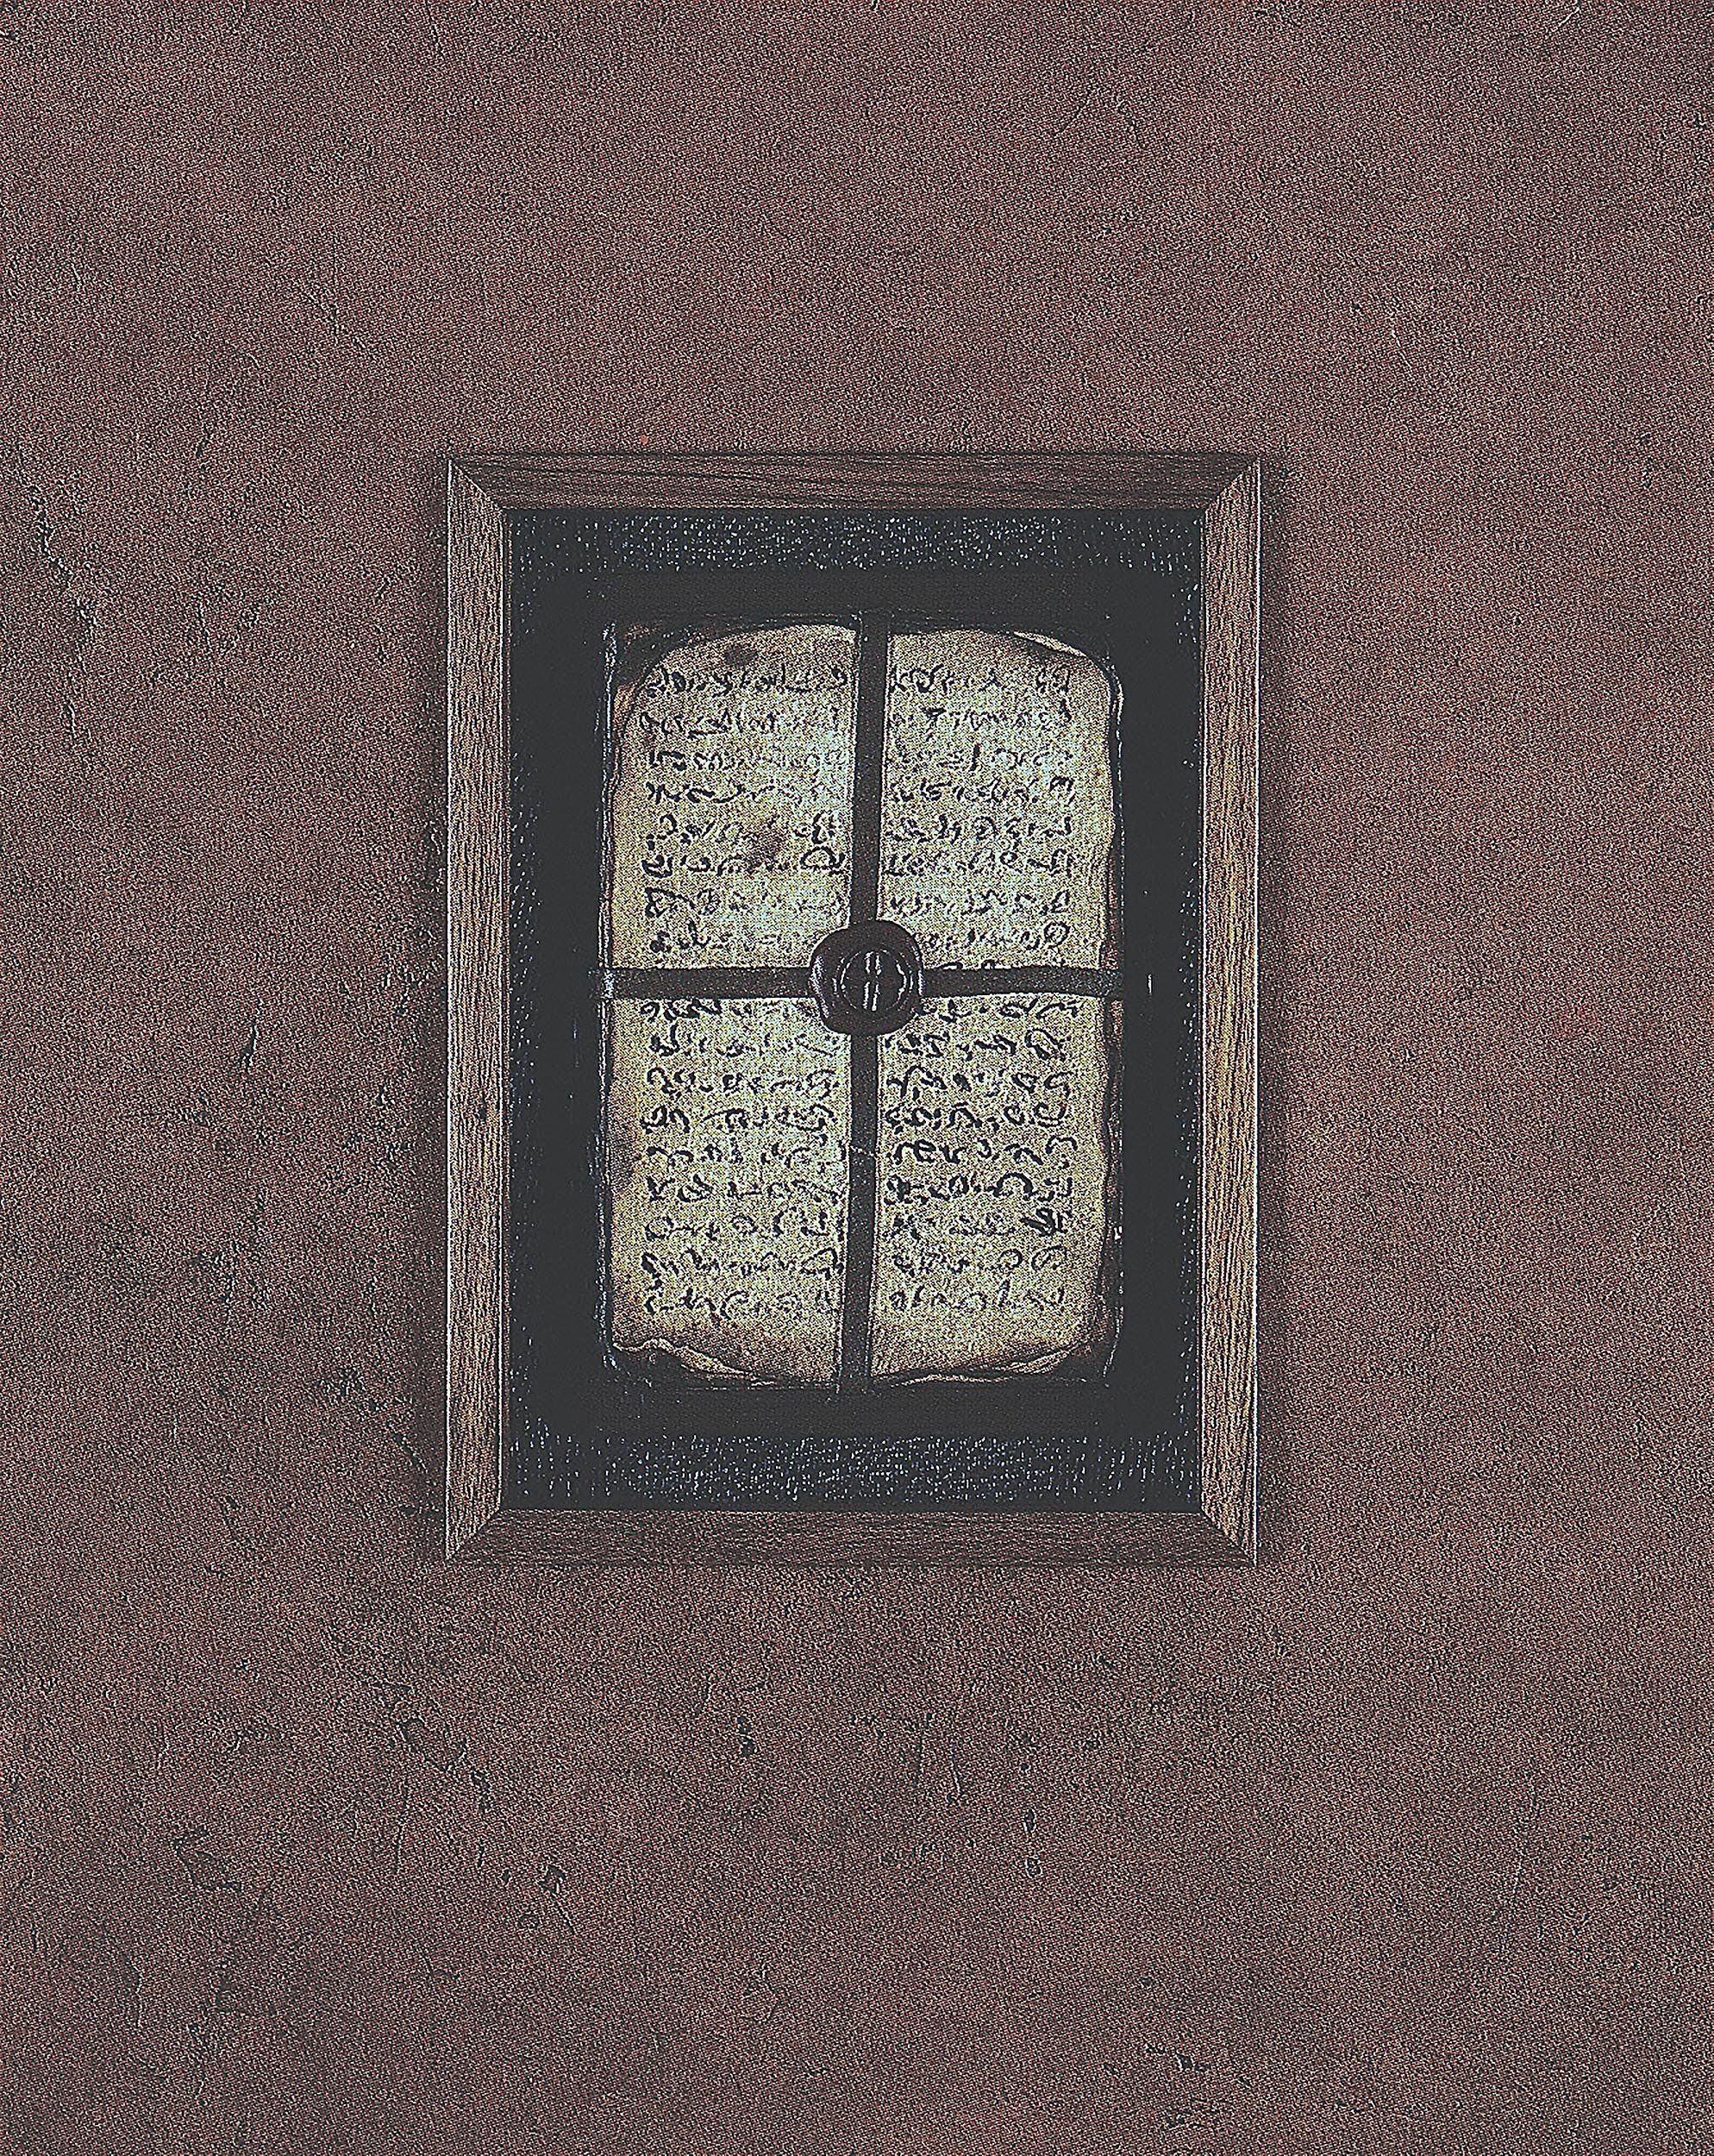 Codex II